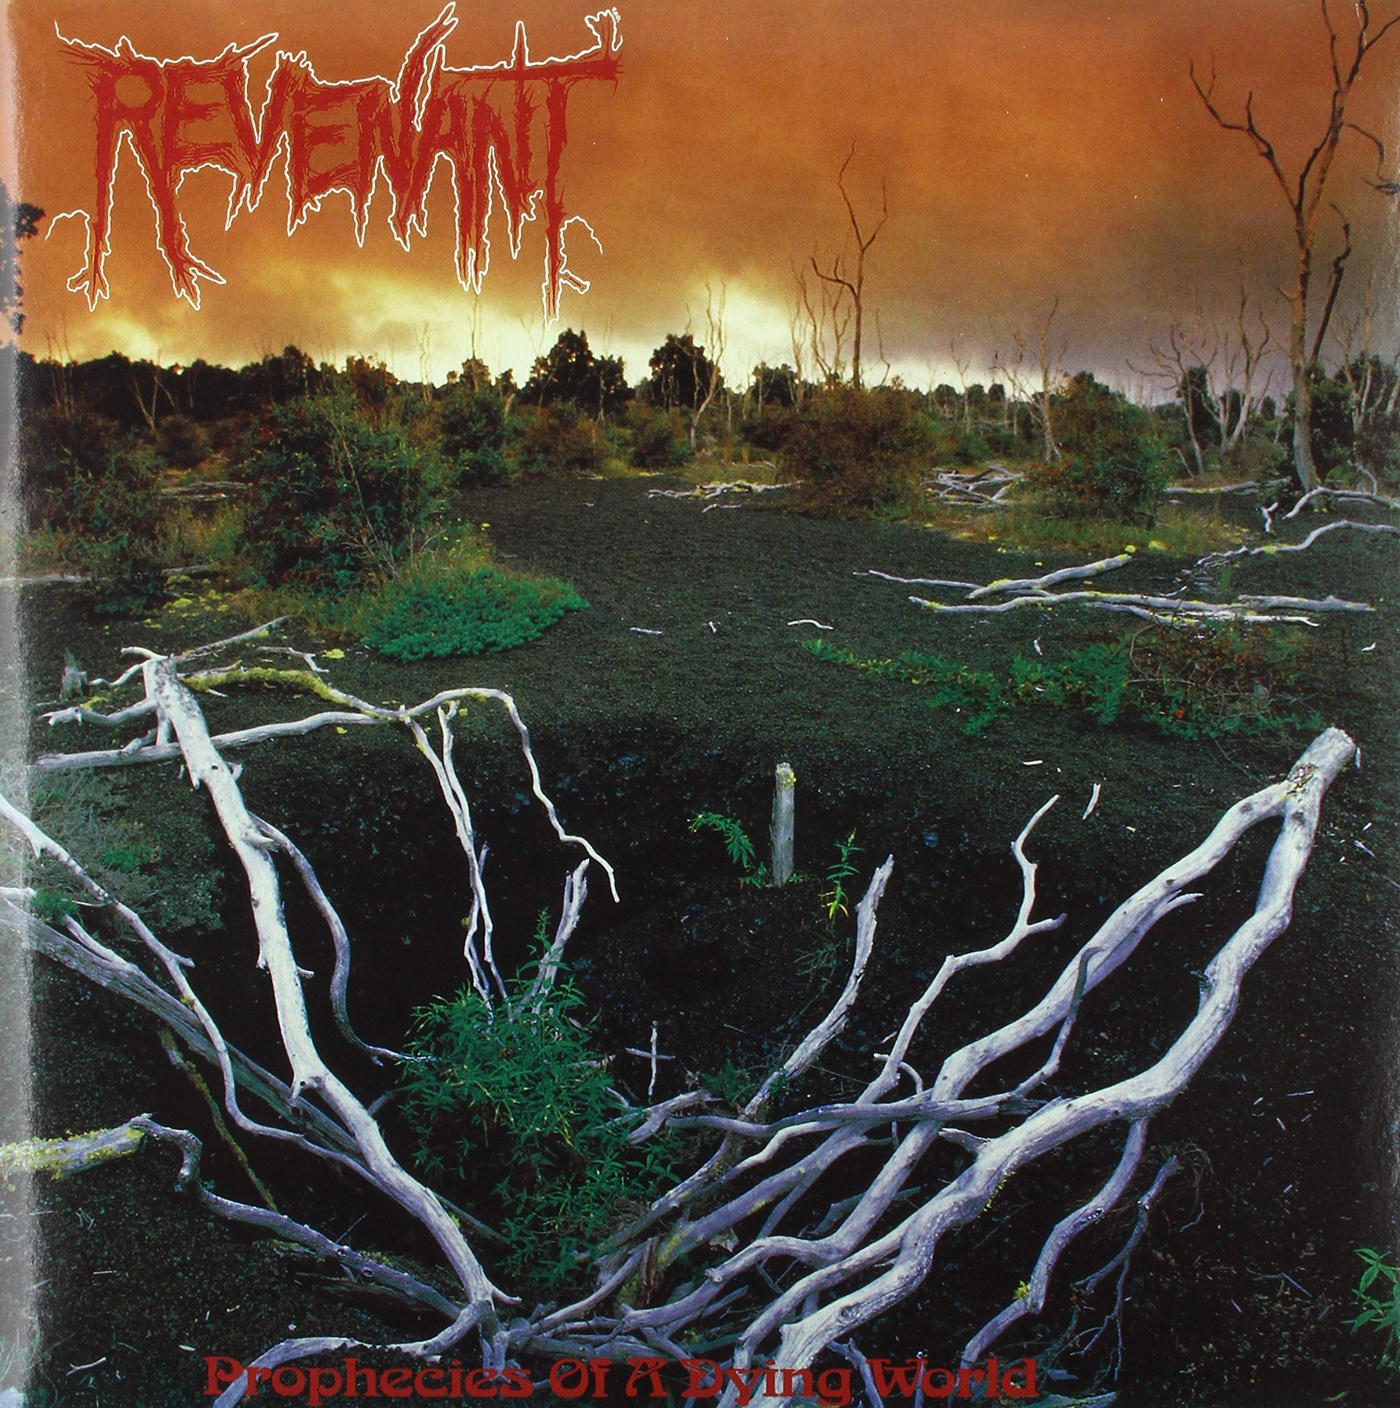 Последний трэш. Revenant Prophecies of a Dying World. Revenant [1991] Prophecies of a Dying World. Revenant Band. Dead Metal редкие пластинки.